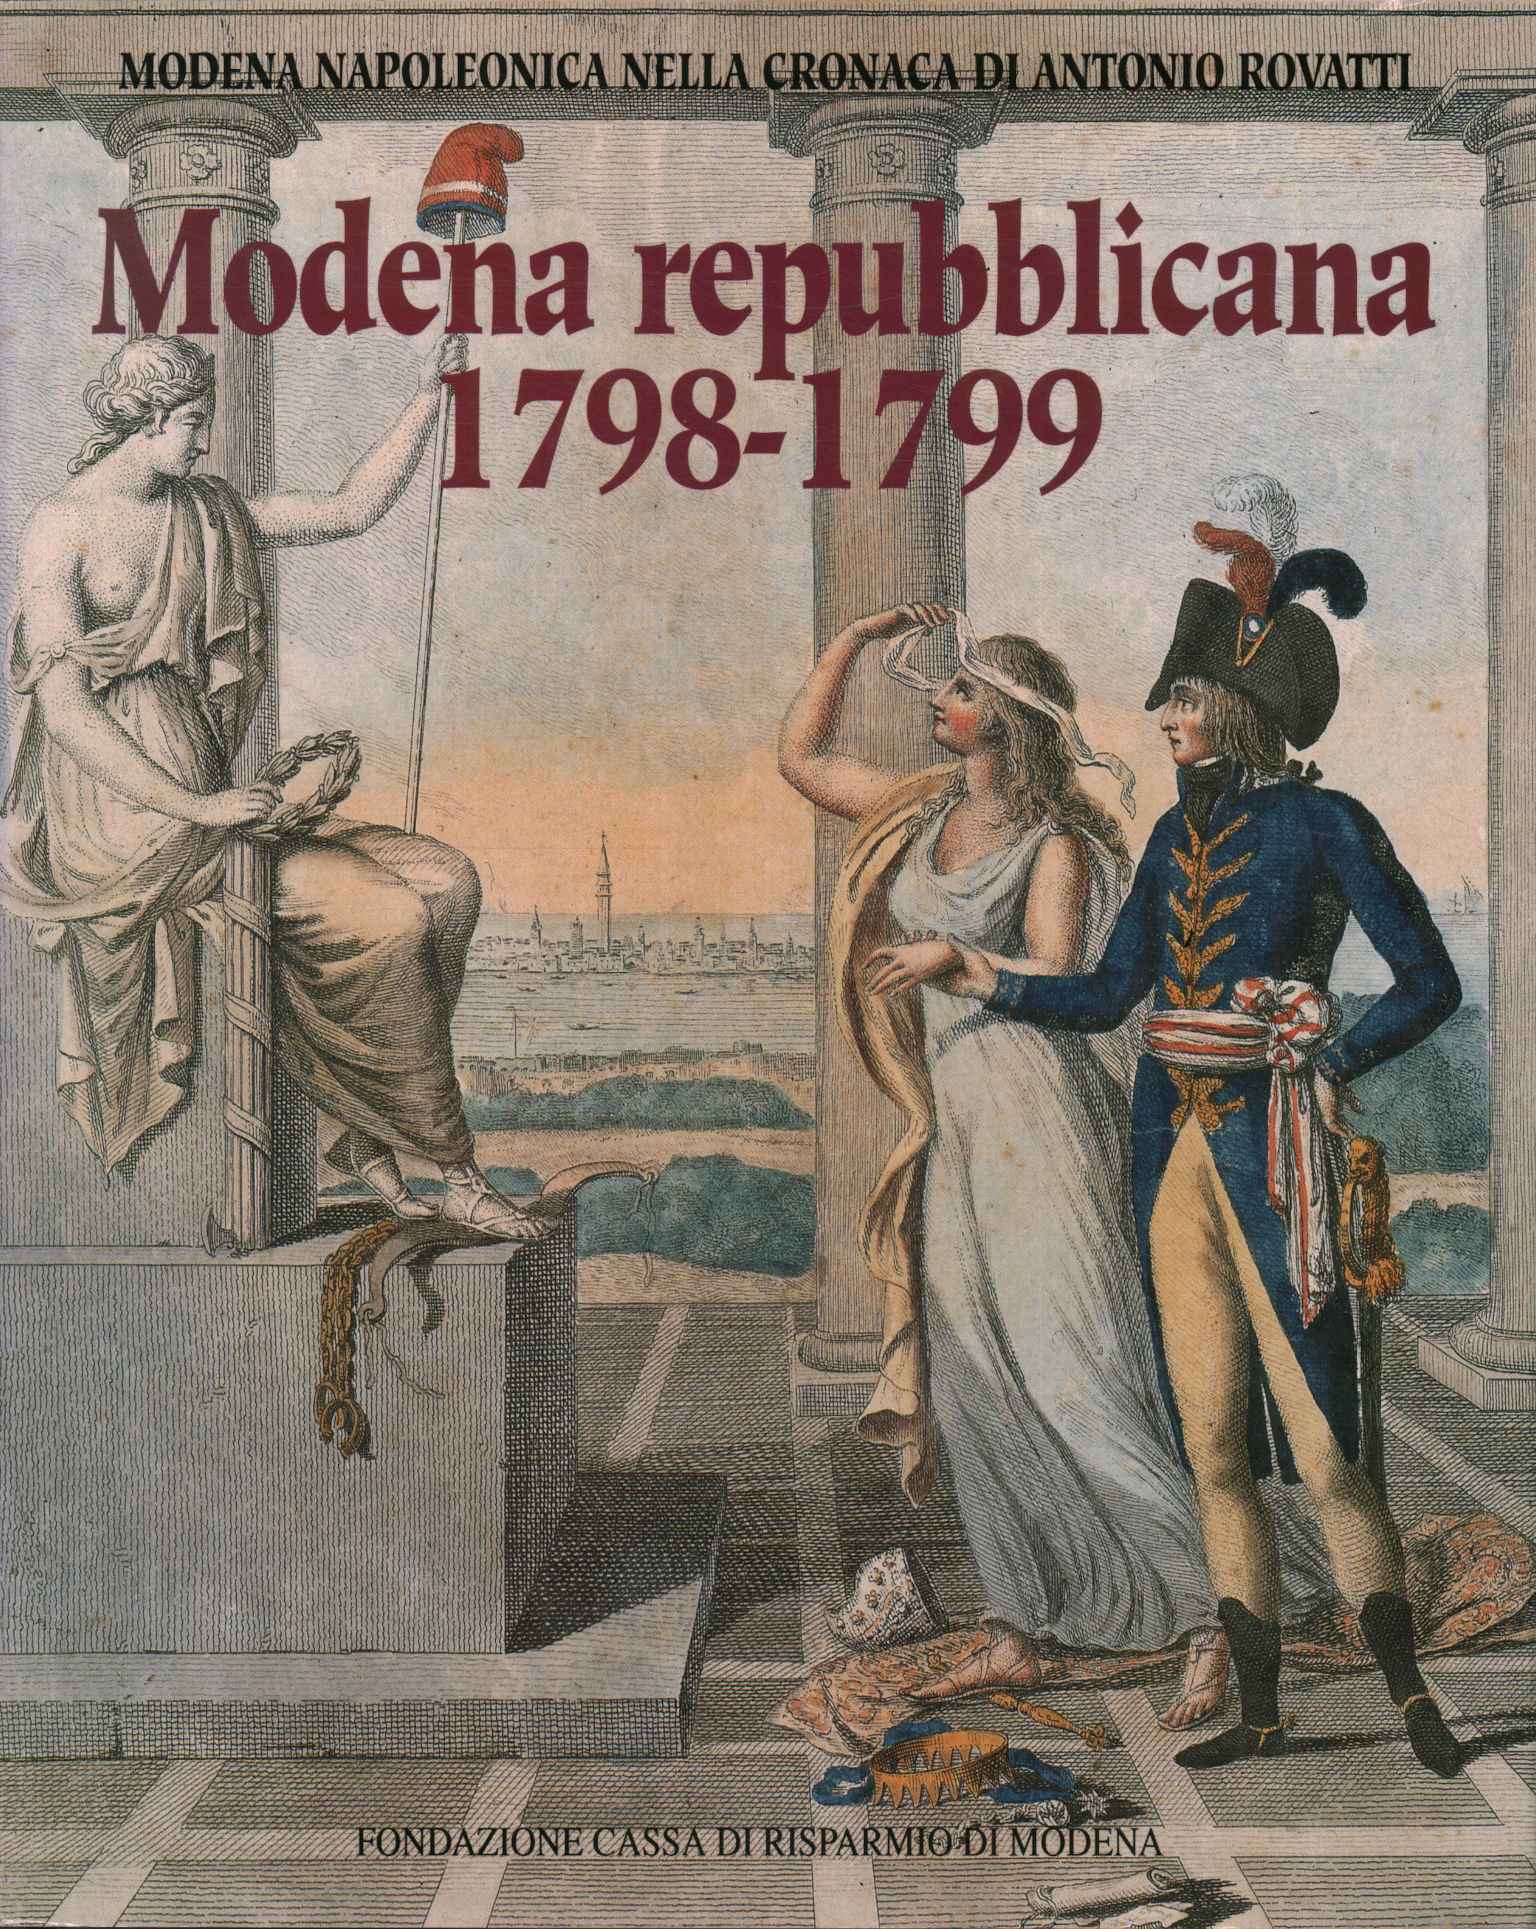 Republican Modena 1798-1799